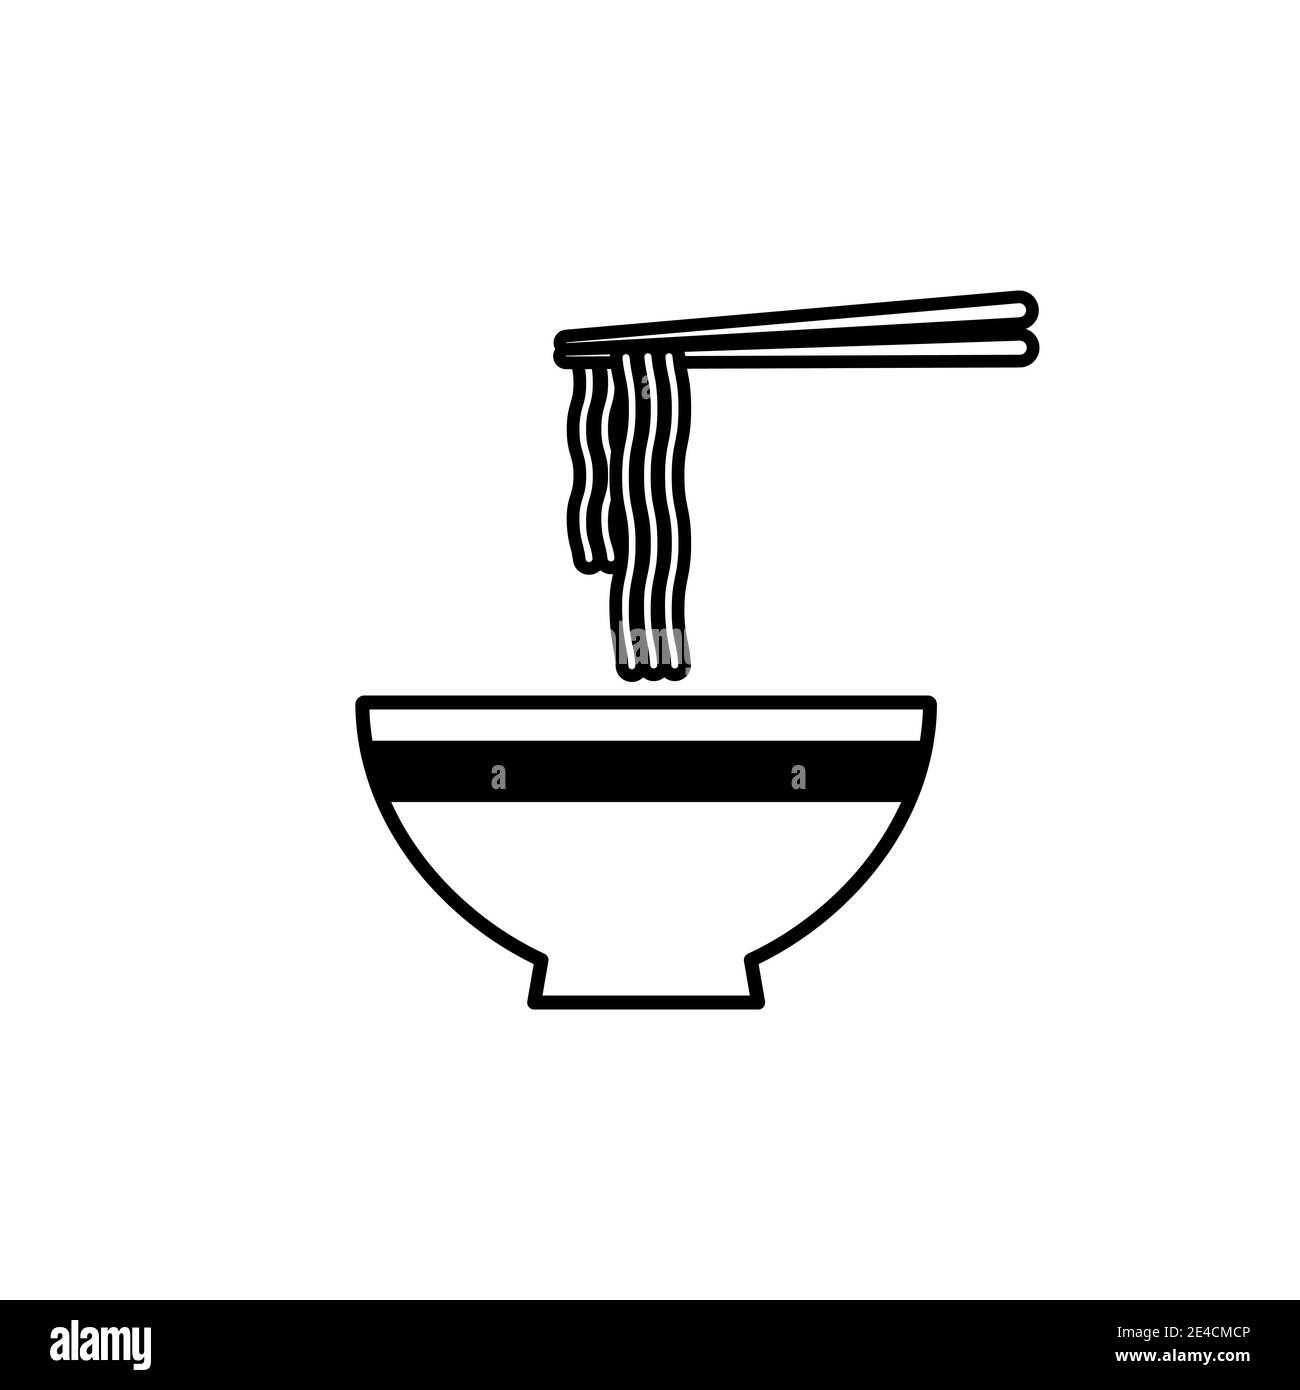 Ramen noodle soup bowl with chopsticks icon. Bowl of ramen noodle icon. Stock Vector